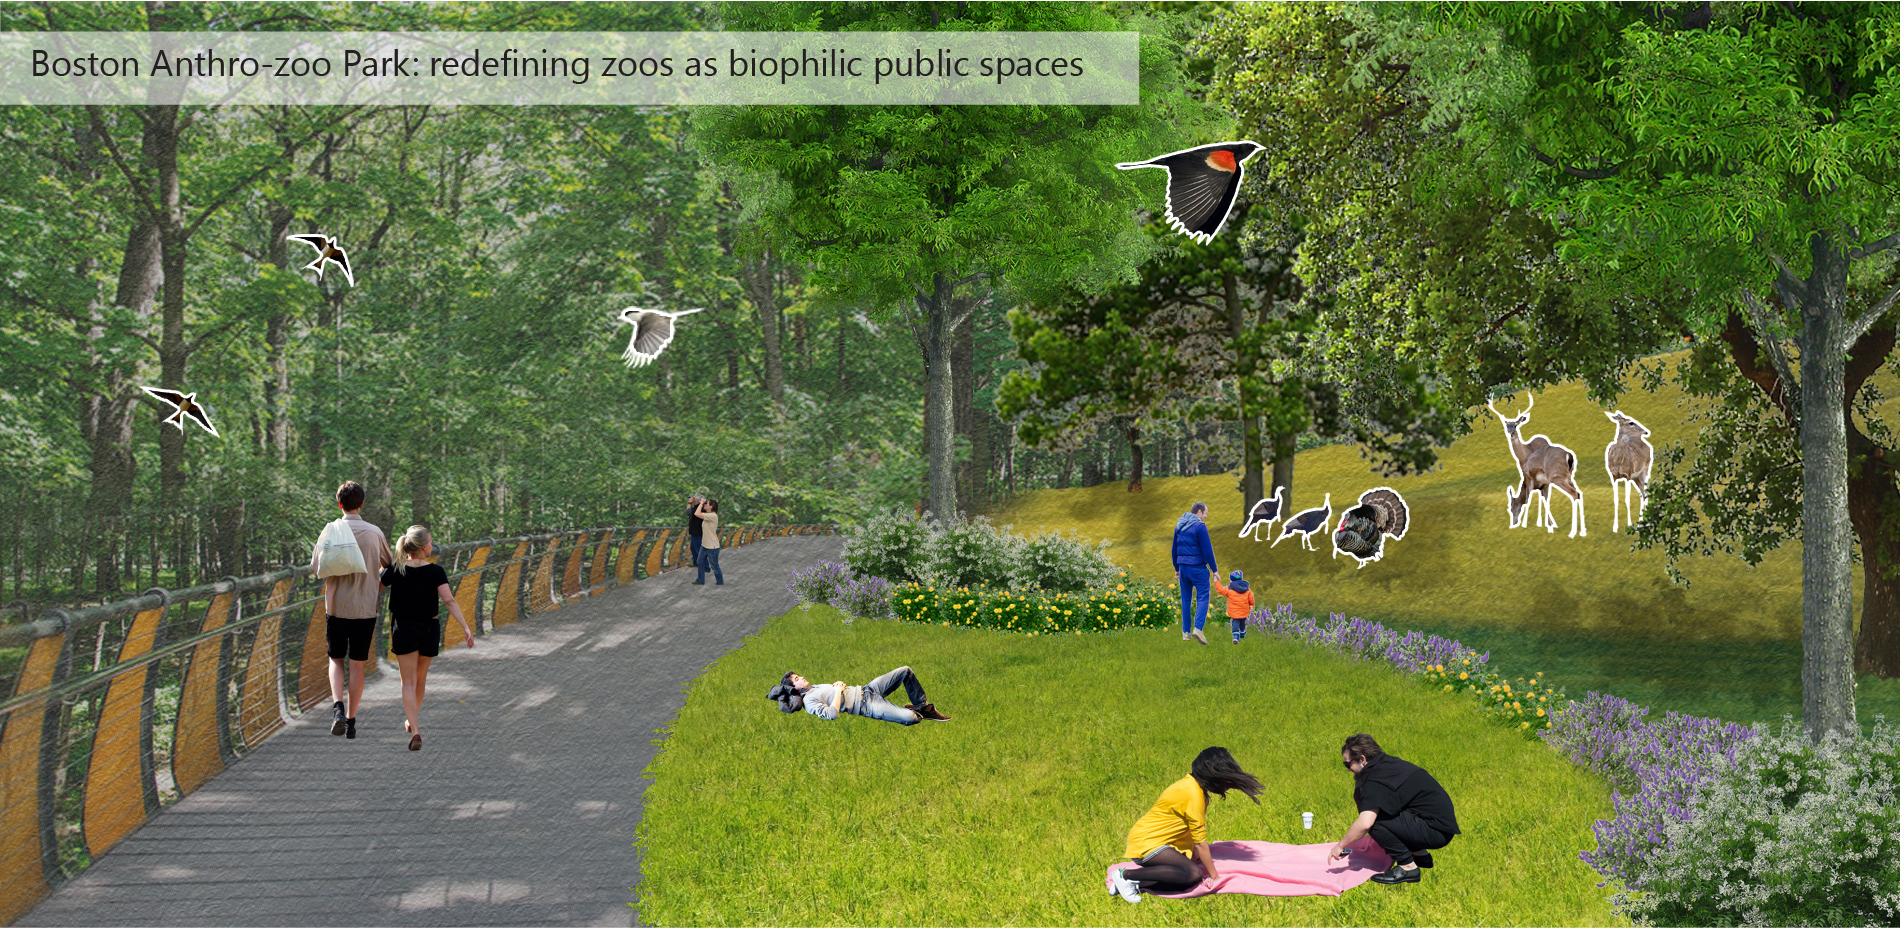 Boston Anthro-zoo Park: redefining zoos as biophilic public spaces